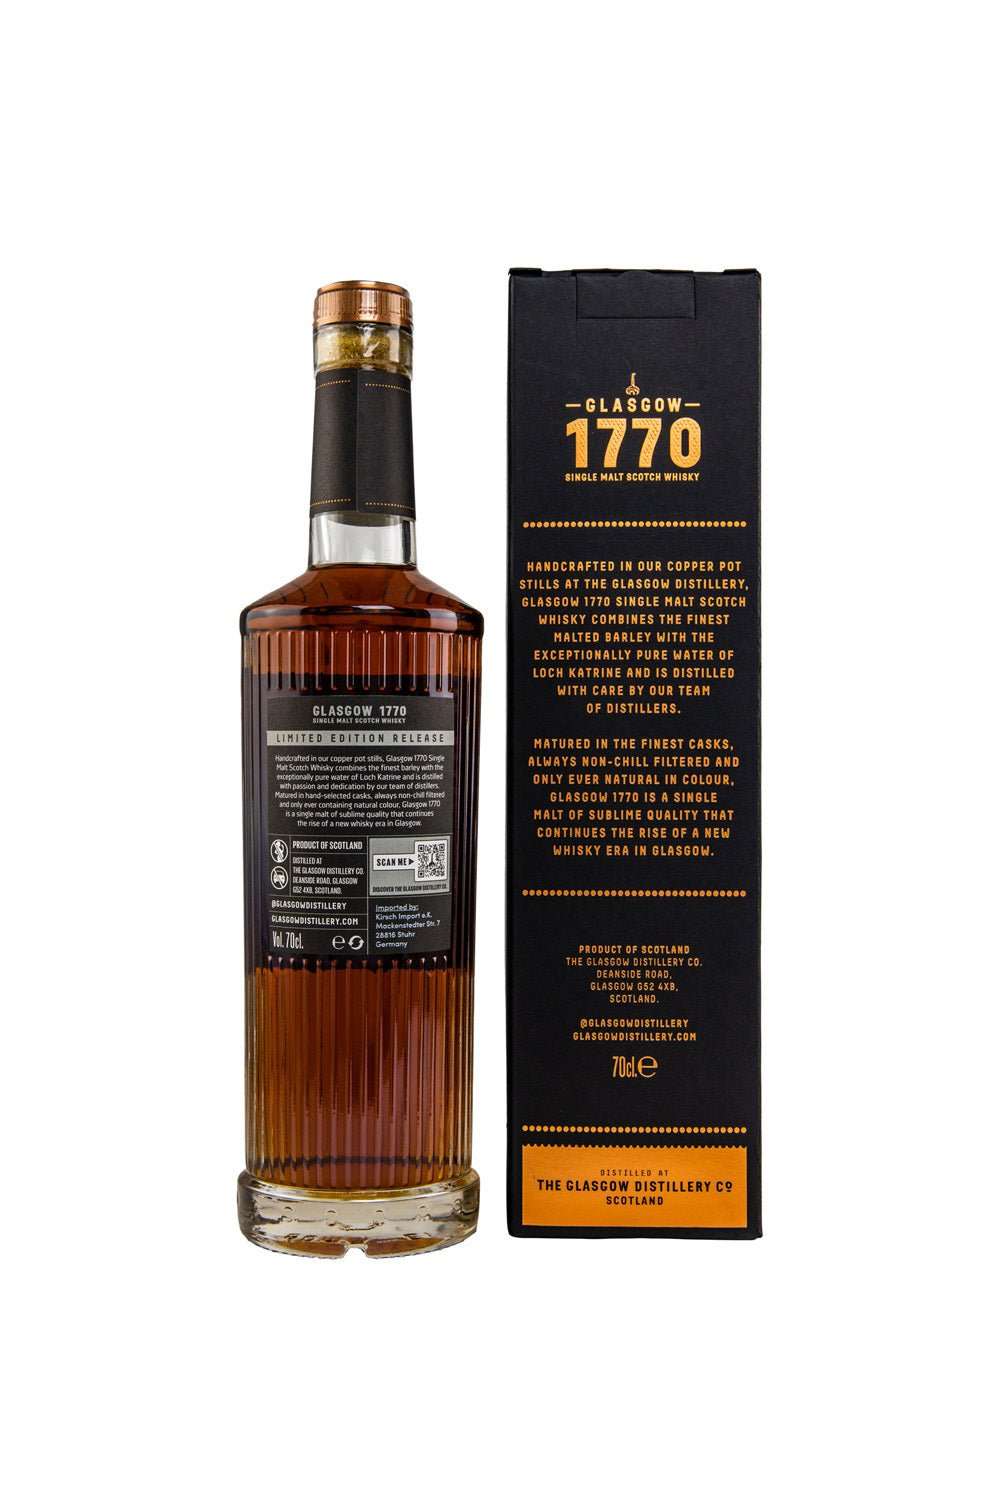 1770 Glasgow Distillery 2016/2022 Single Cask #16/854 Tokaji for Kirsch 59,3% vol. 700ml - Maltimore